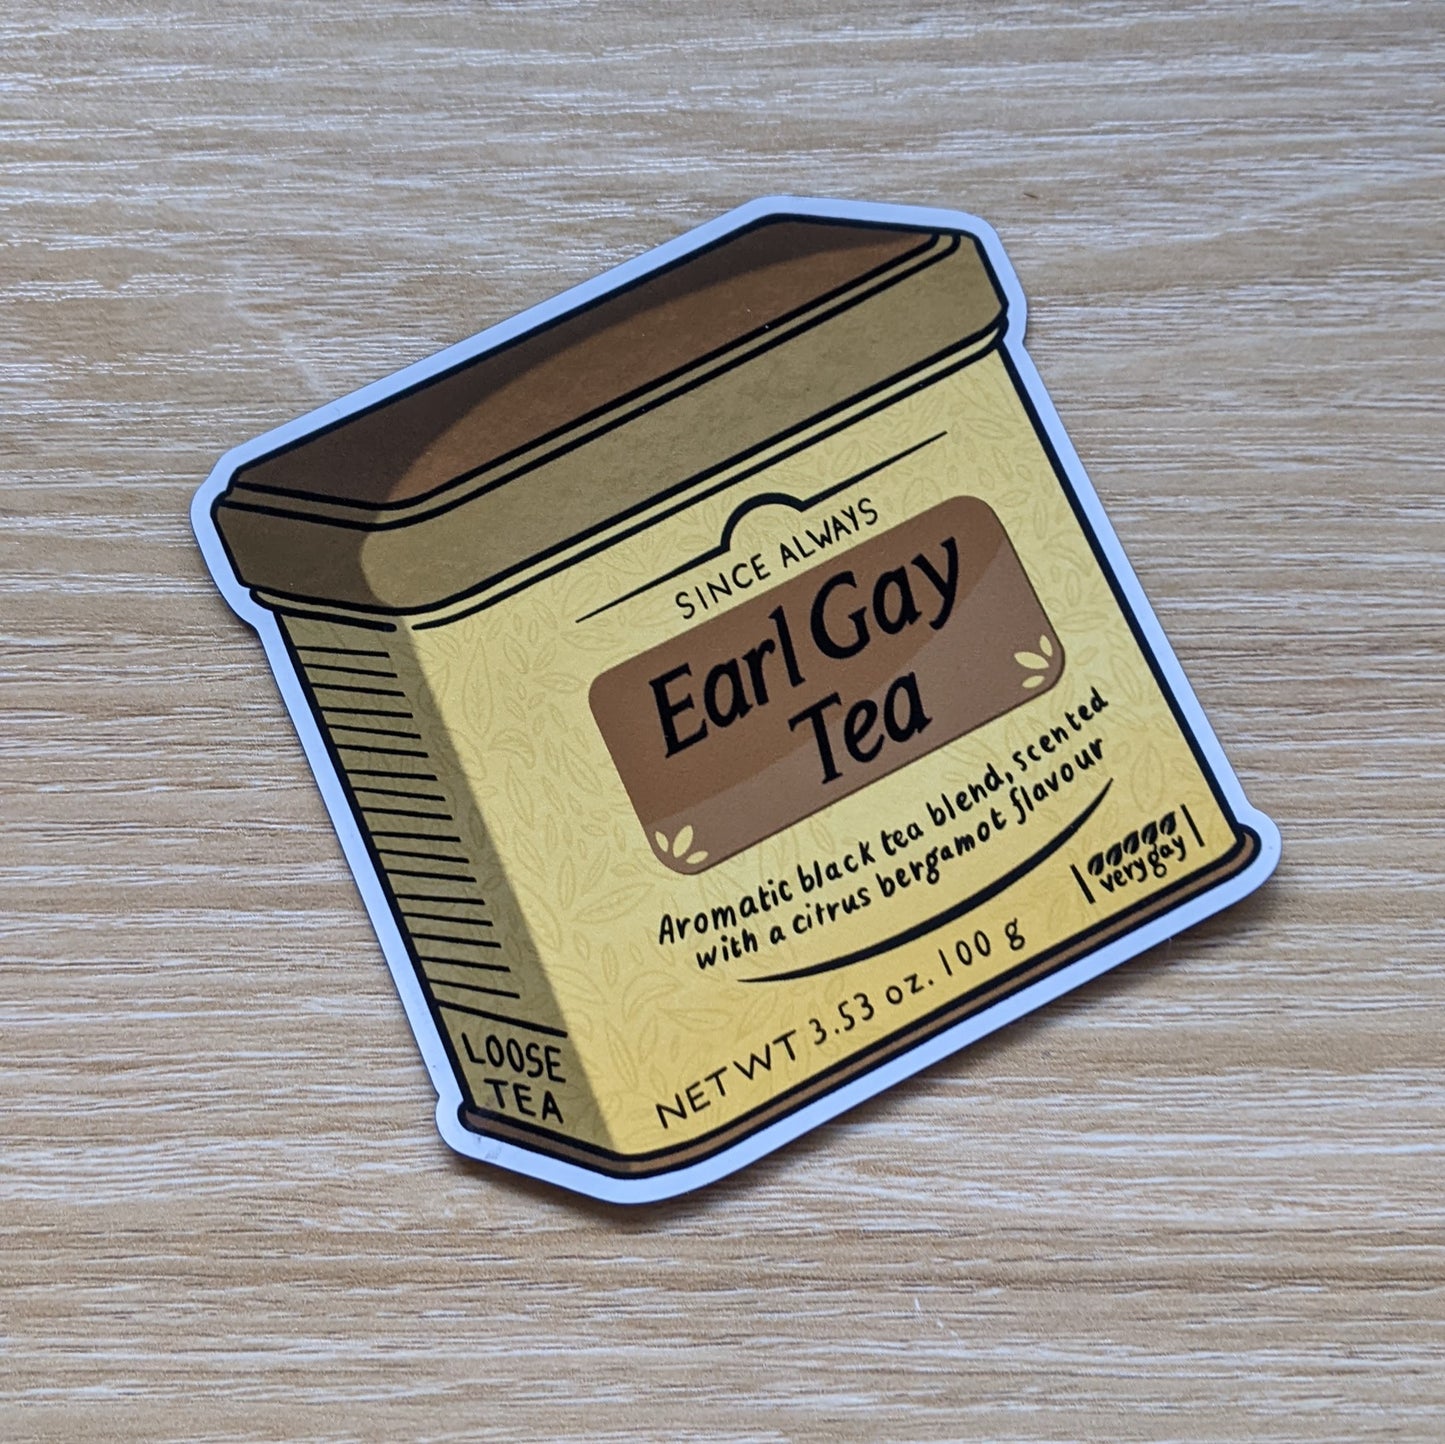 Earl Gay Tea | Magnet